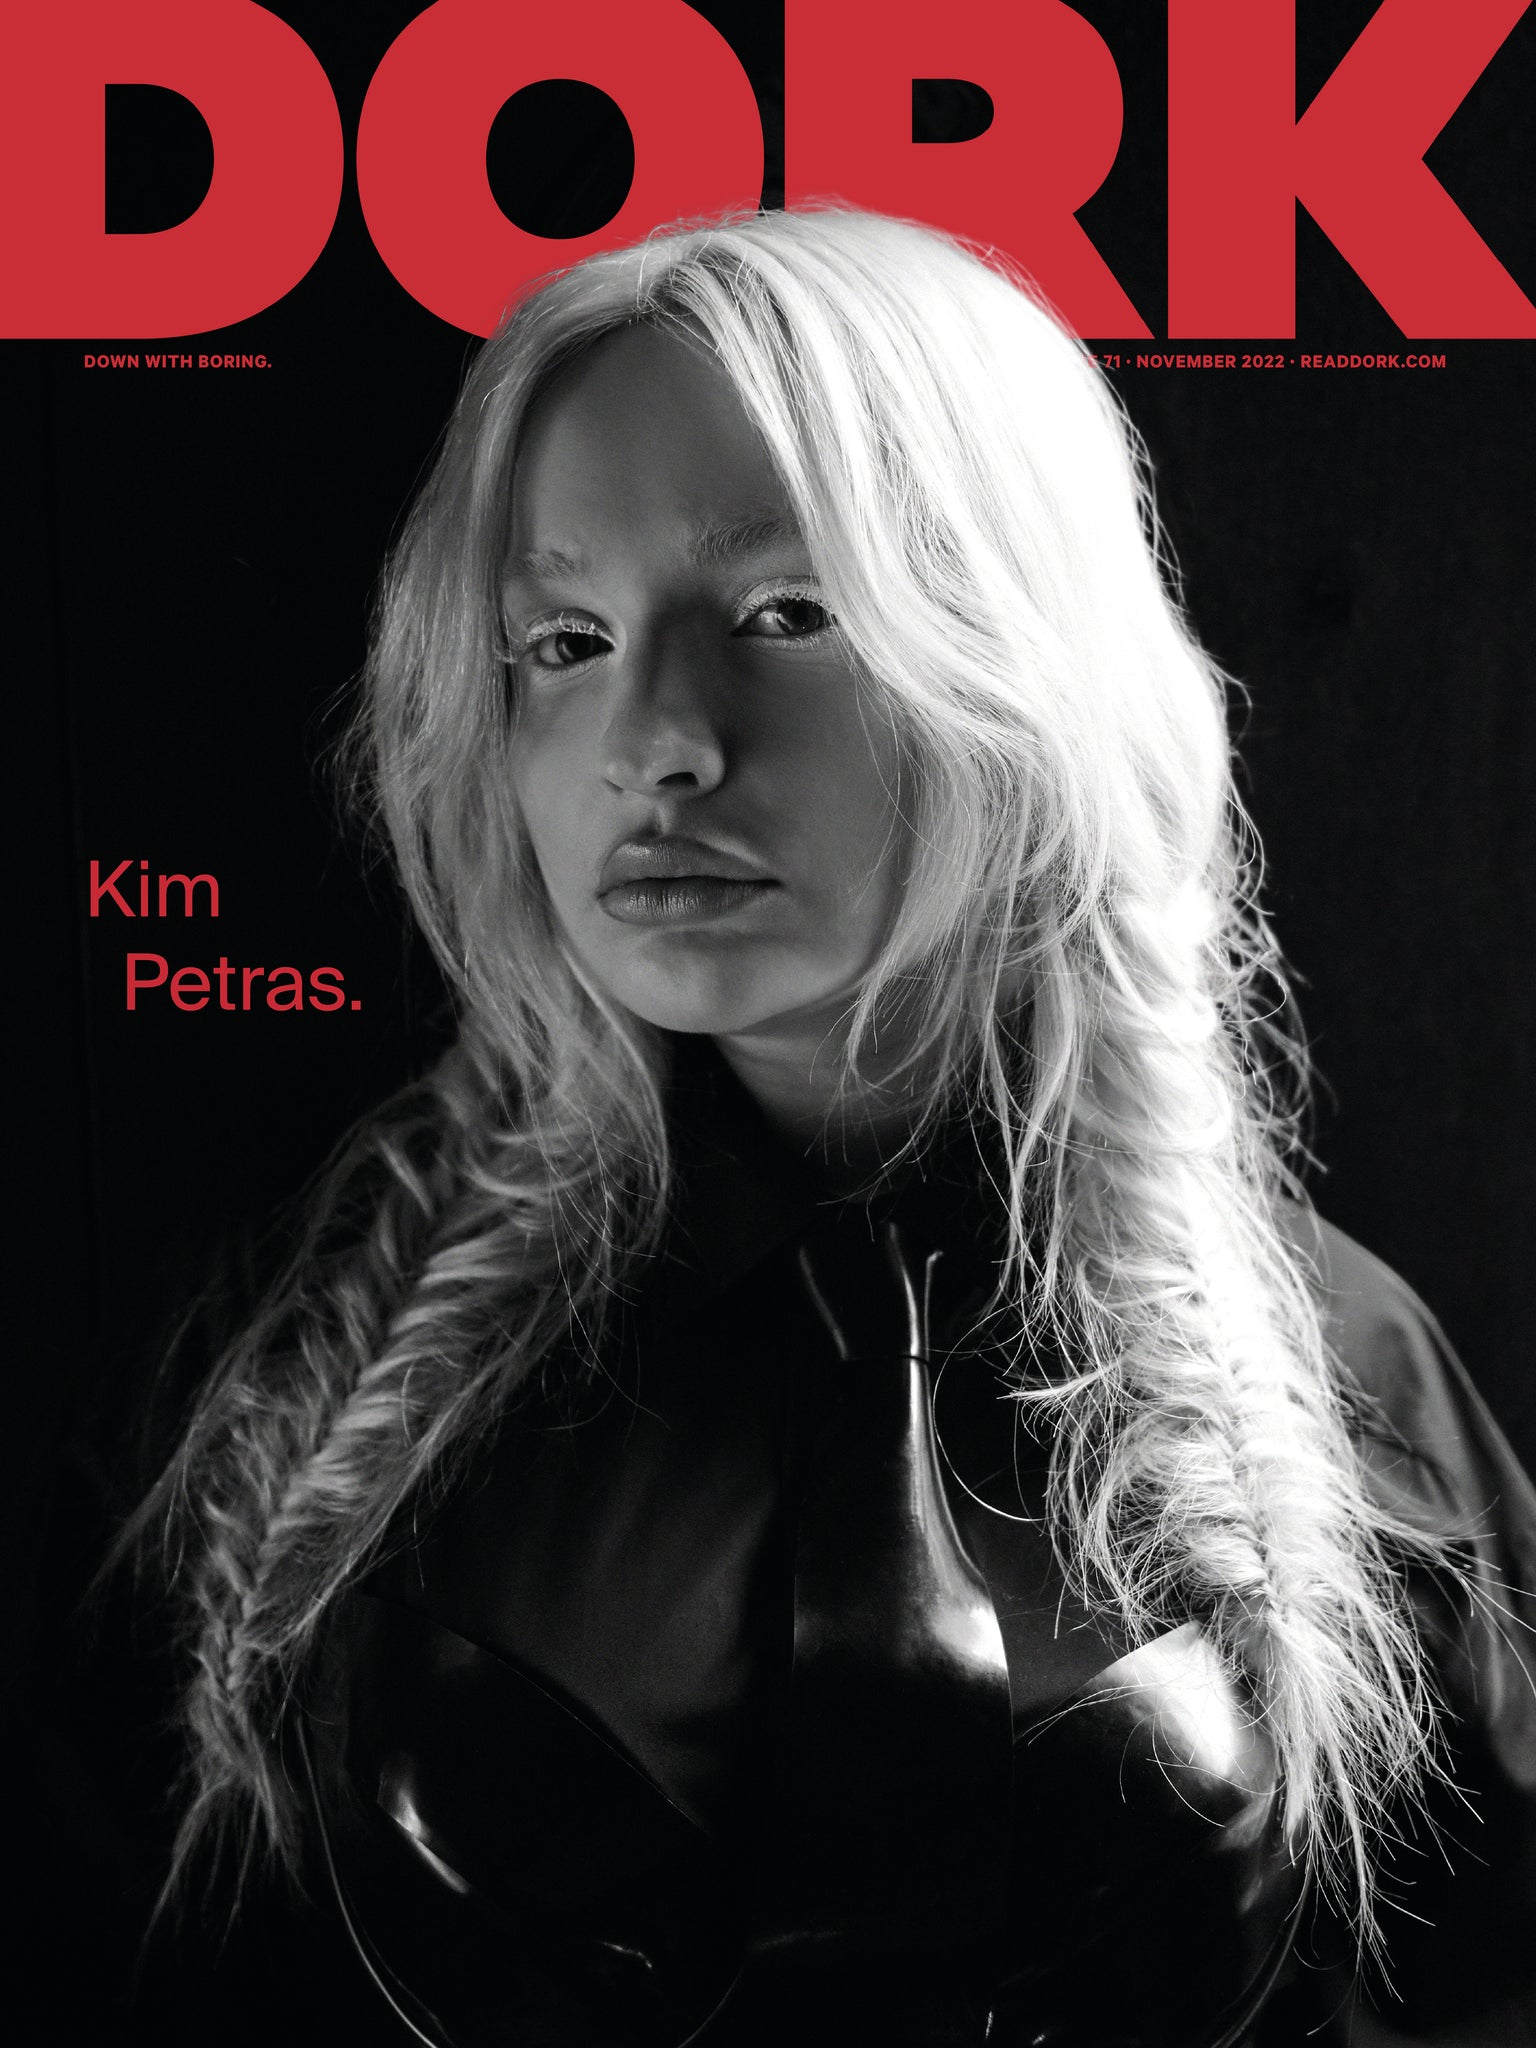 Dork, November 2022 (Kim Petras cover)